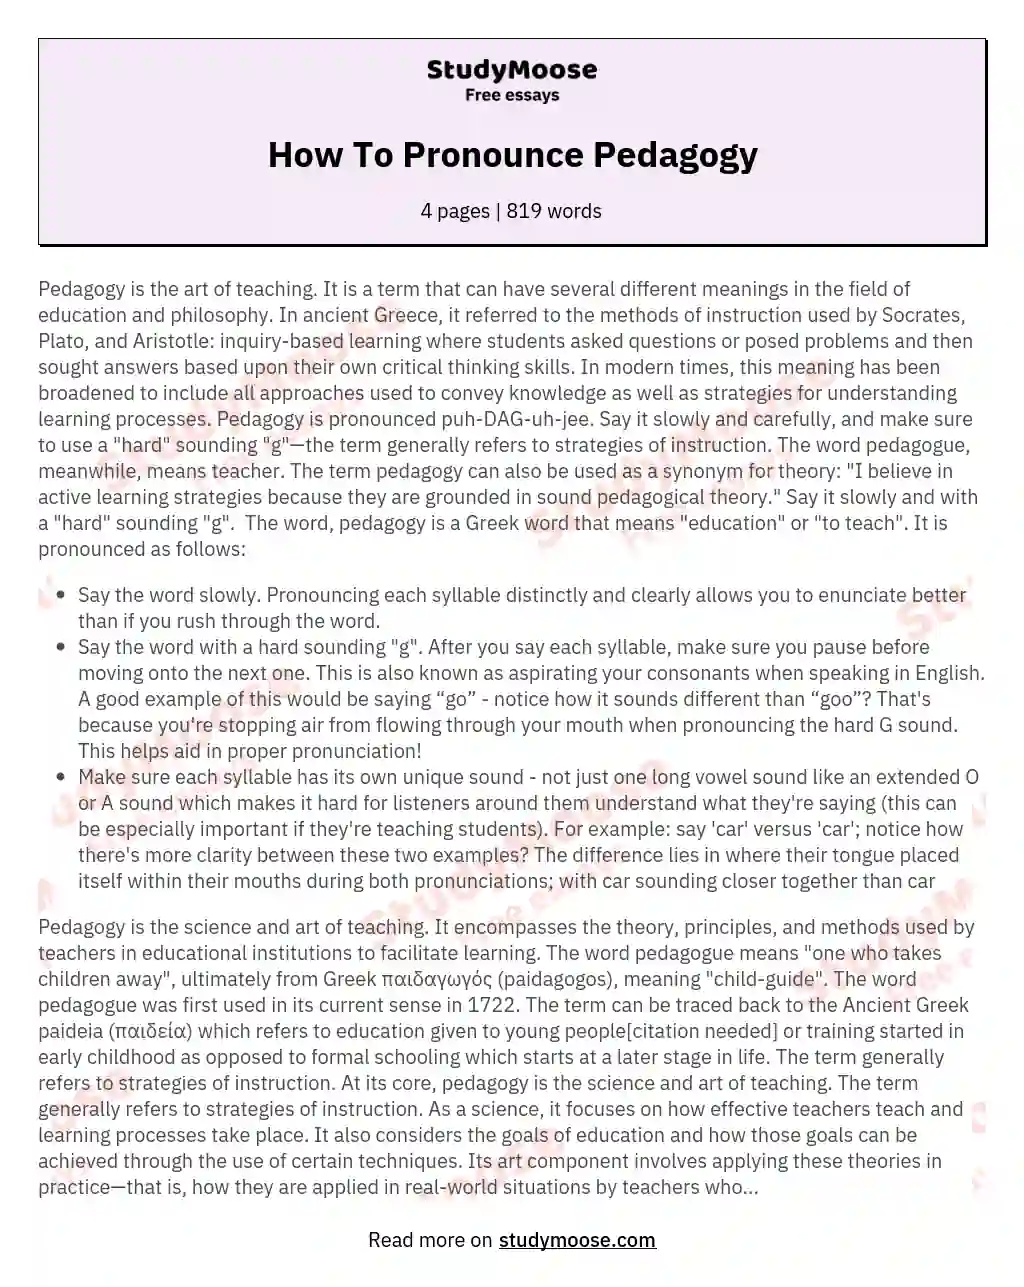 How To Pronounce Pedagogy essay